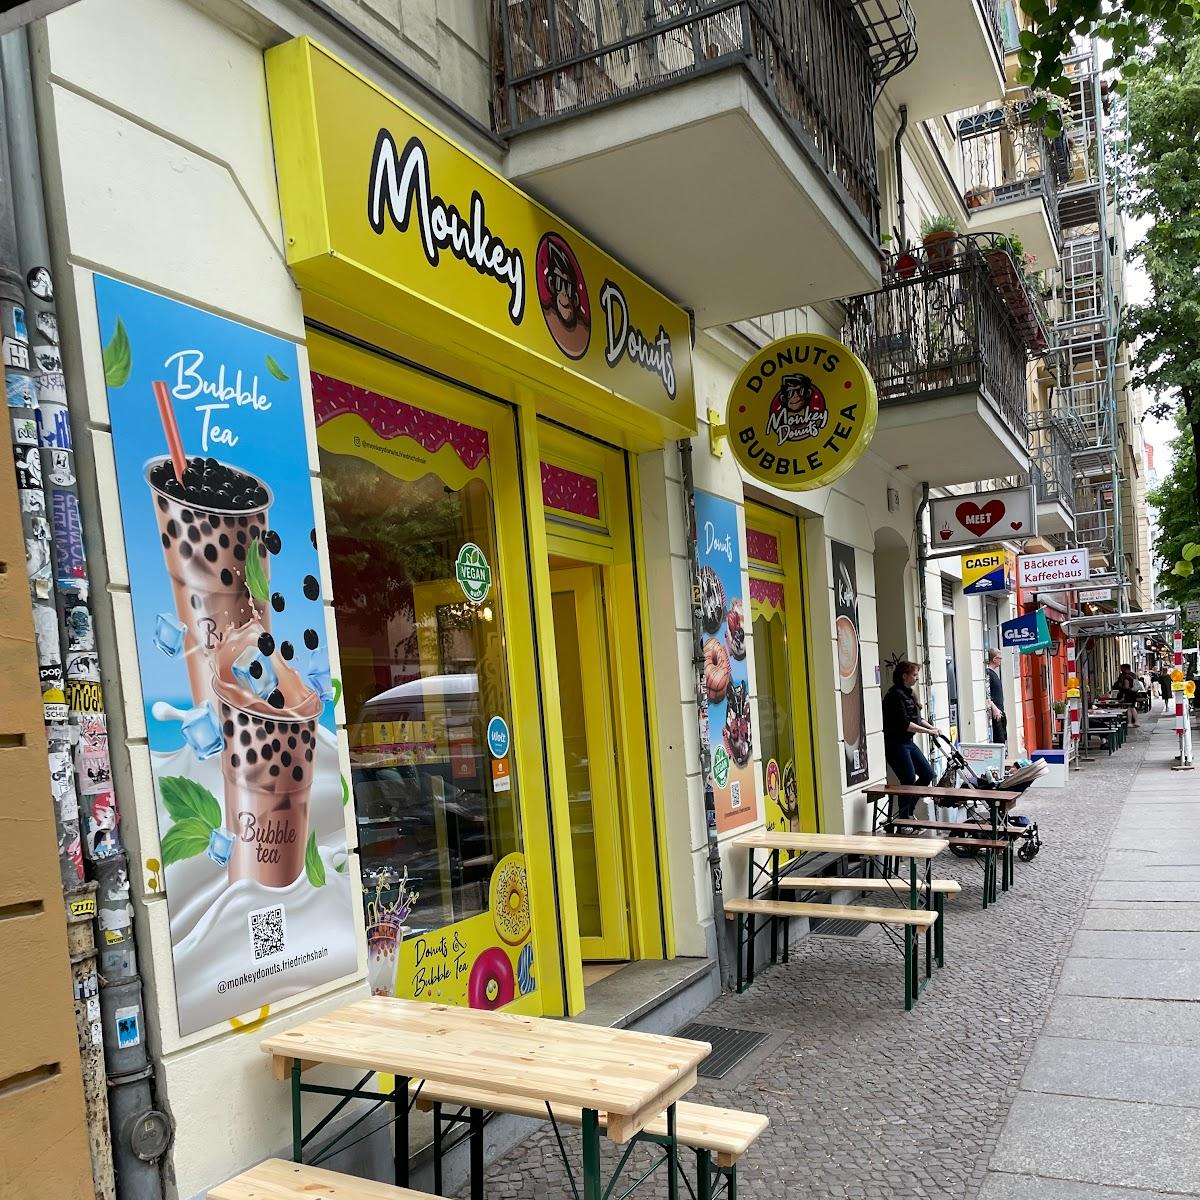 Restaurant "Monkey Donuts & Bubble Tea Boxhagener" in Berlin